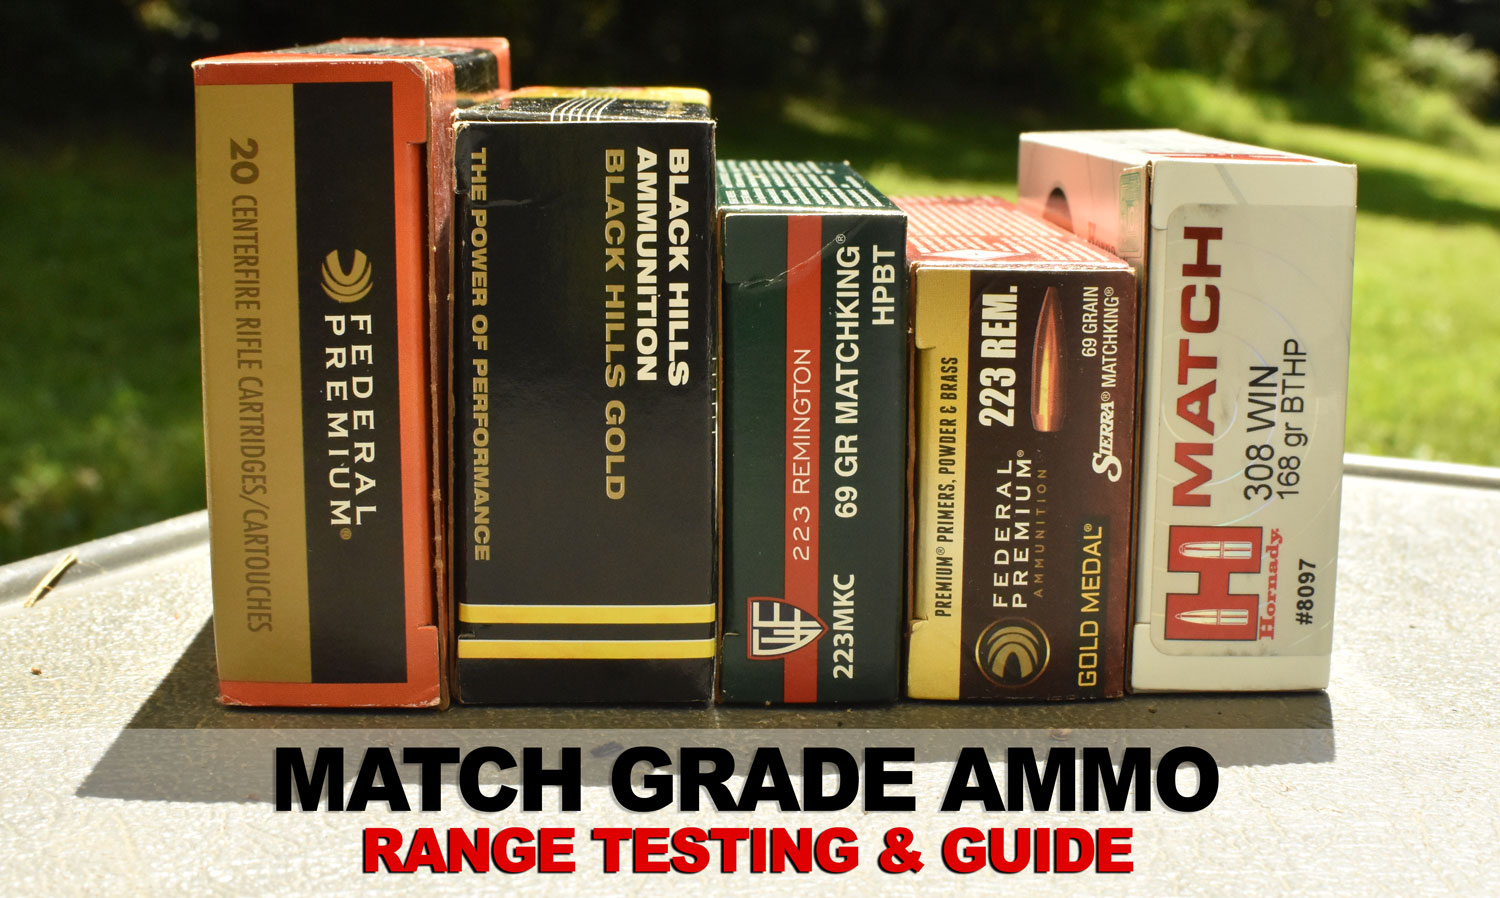 Match Grade ammo